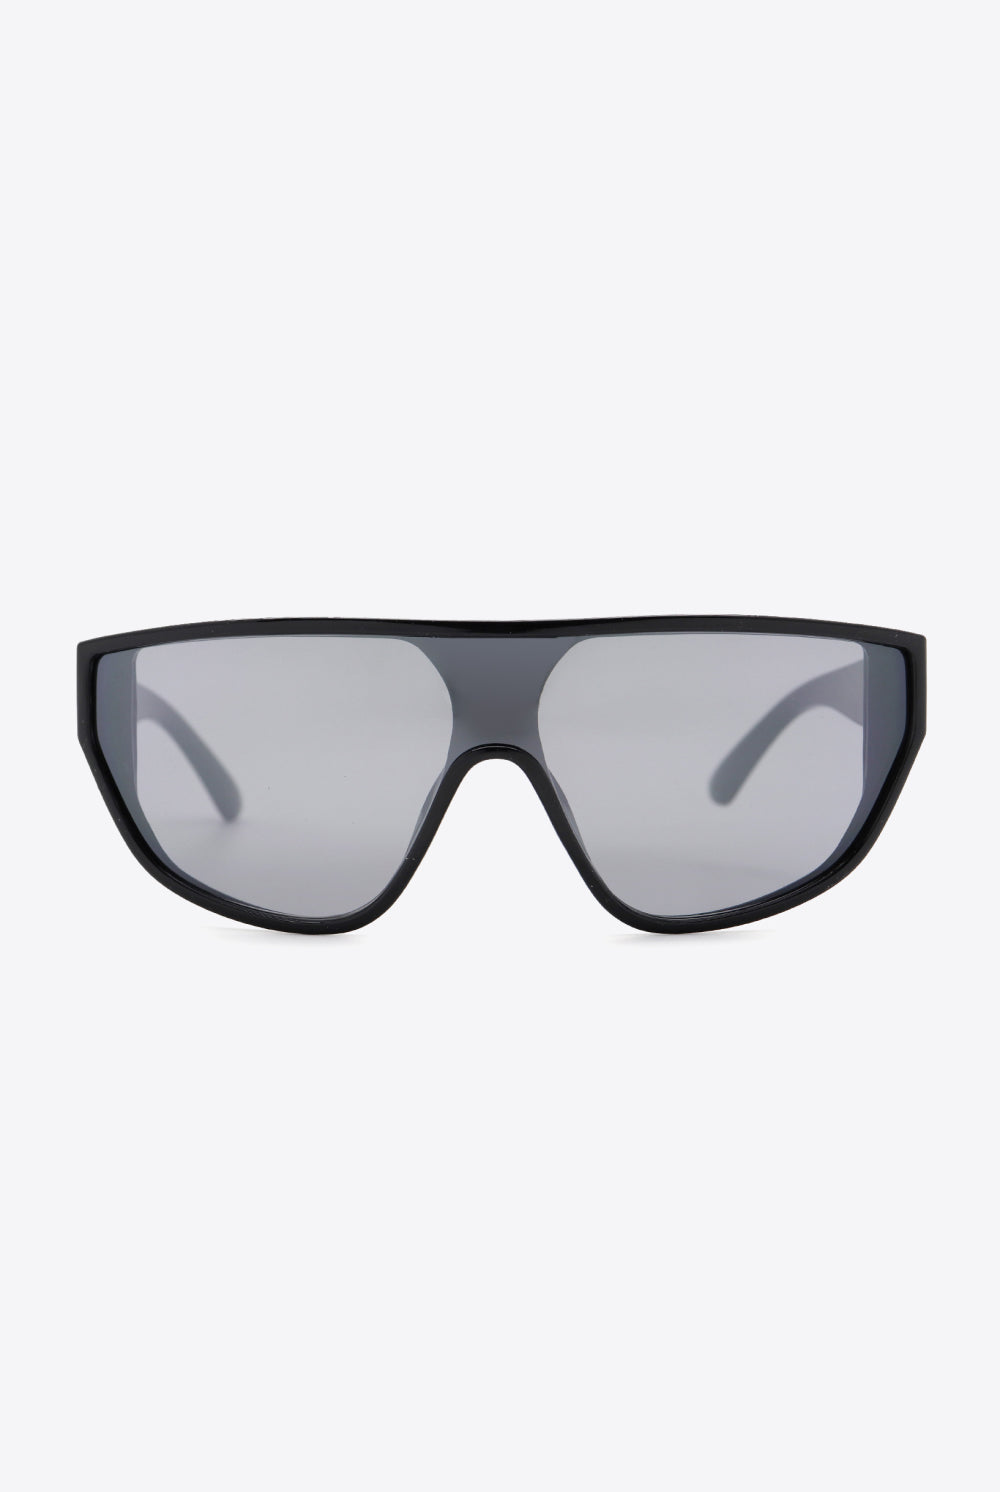 White Smoke UV400 Polycarbonate Wayfarer Sunglasses Sunglasses